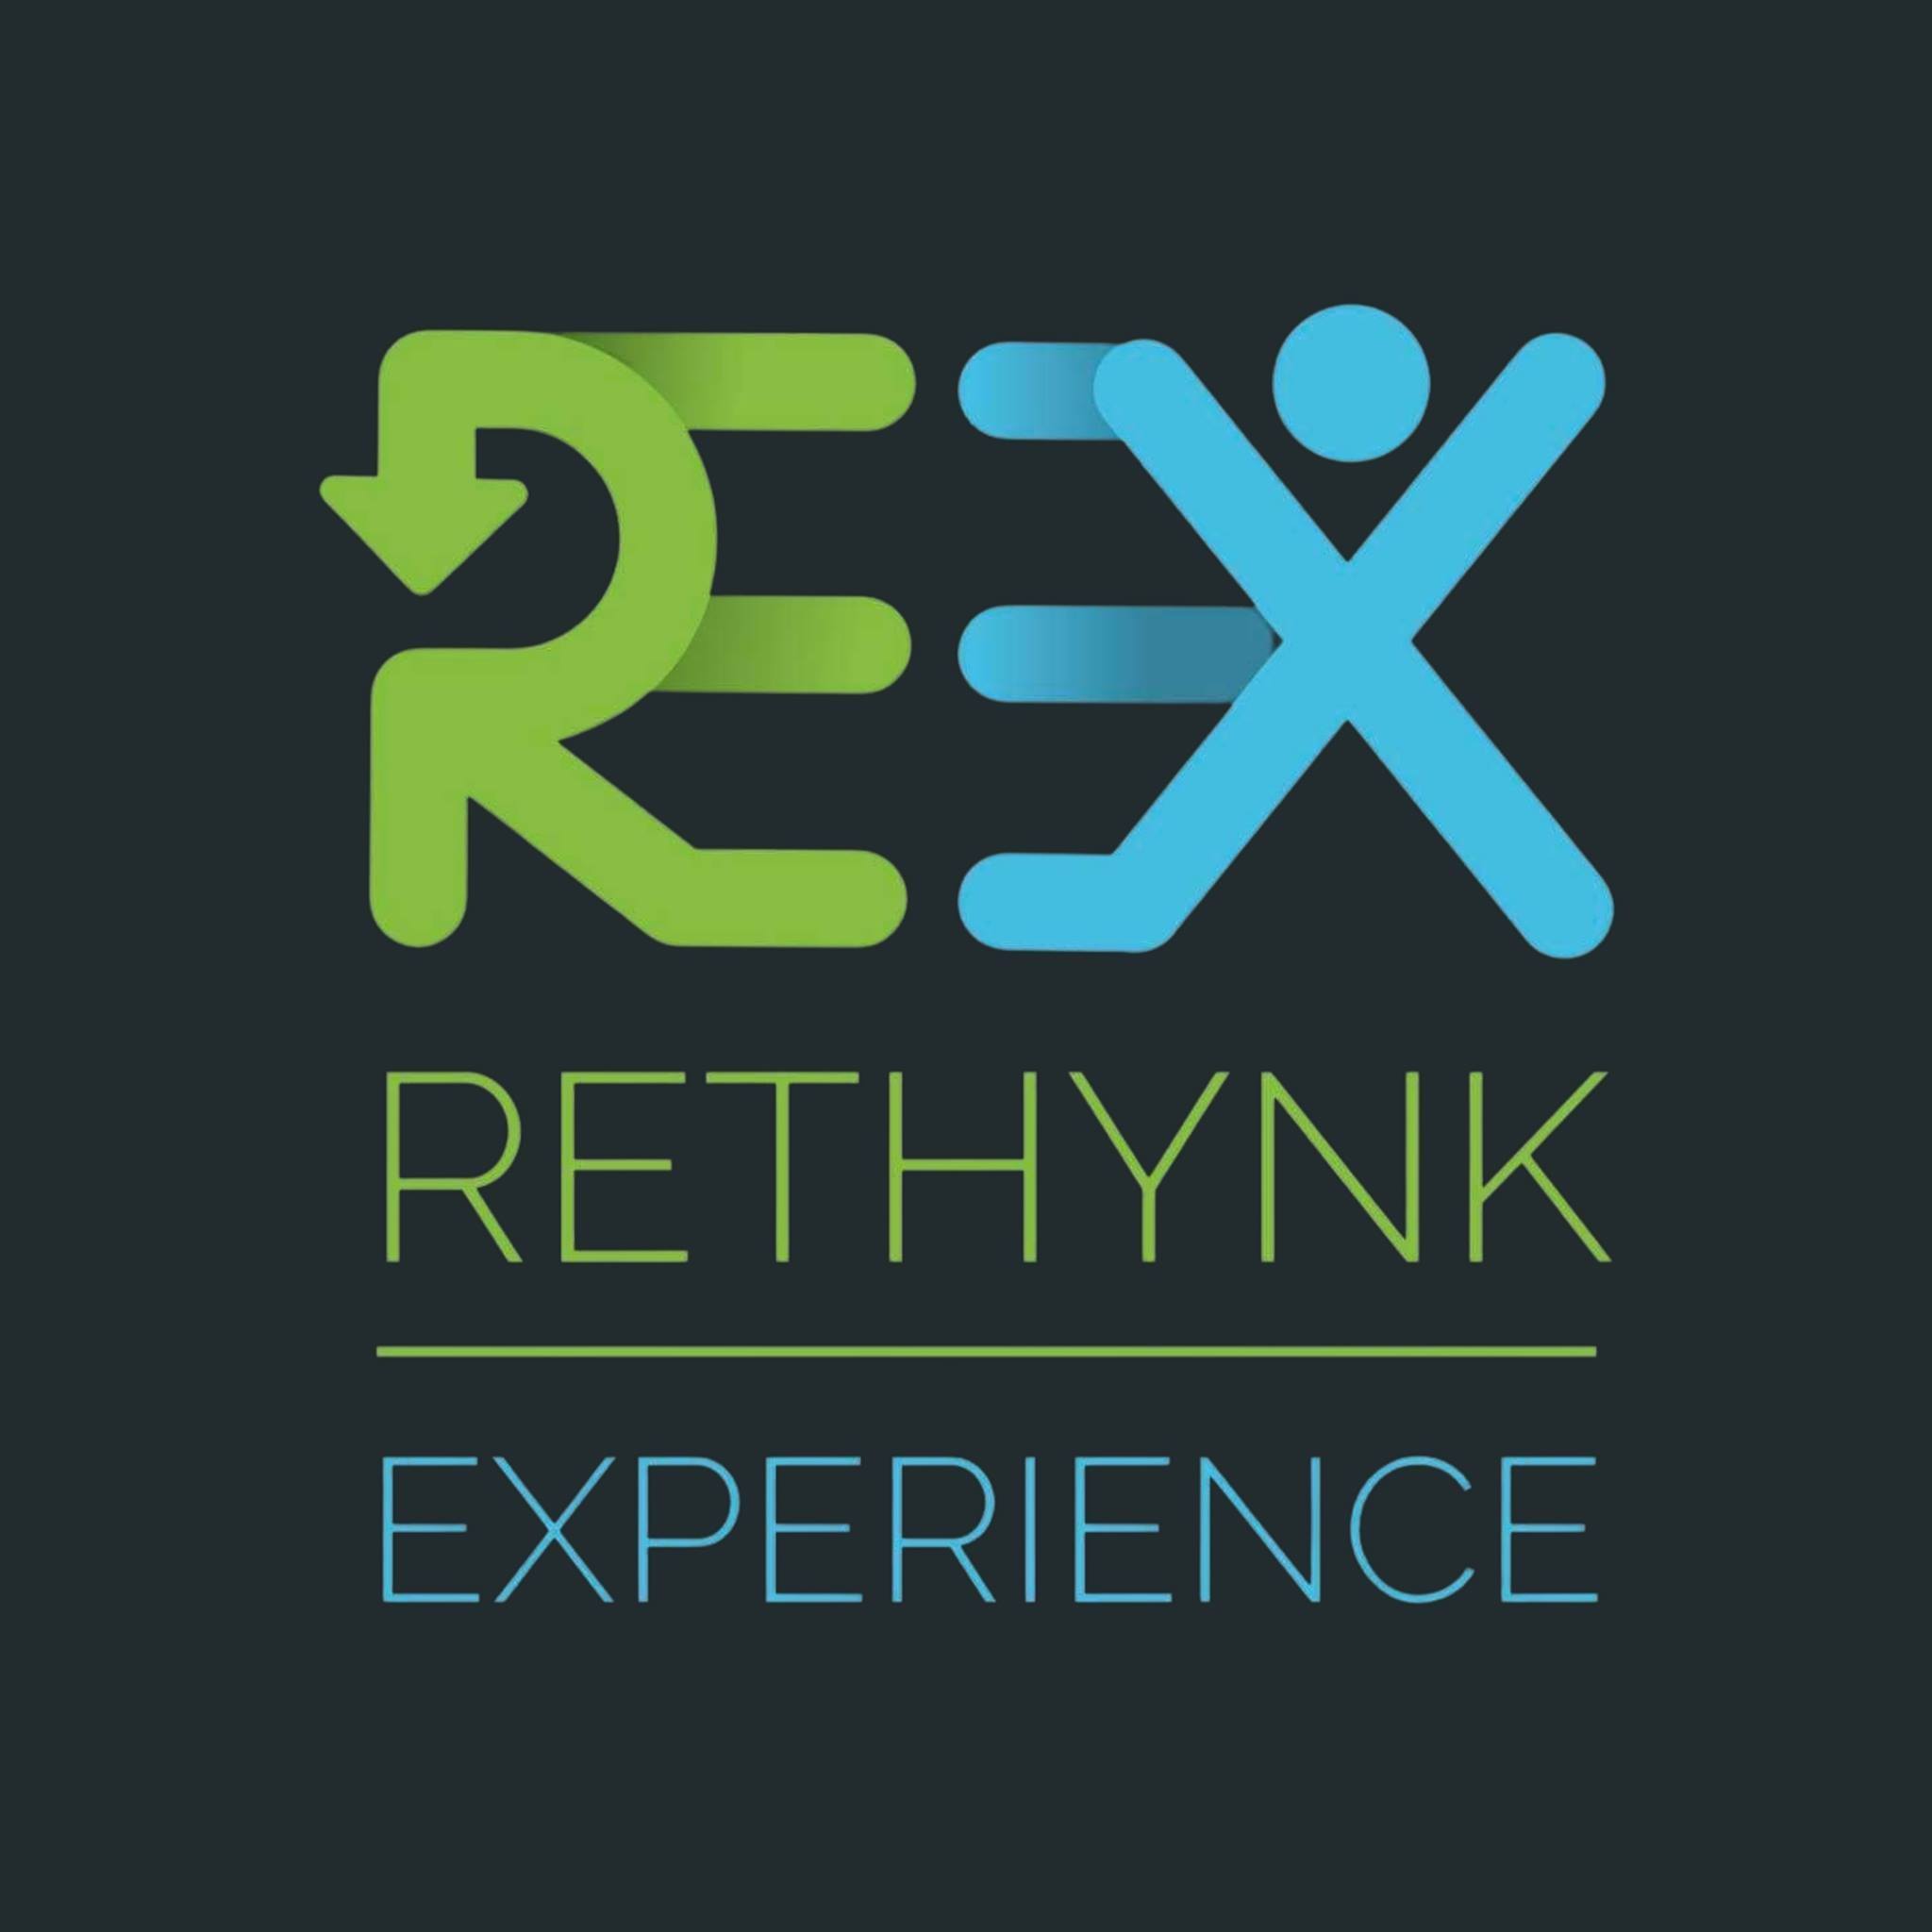 REthynk EXperience logo